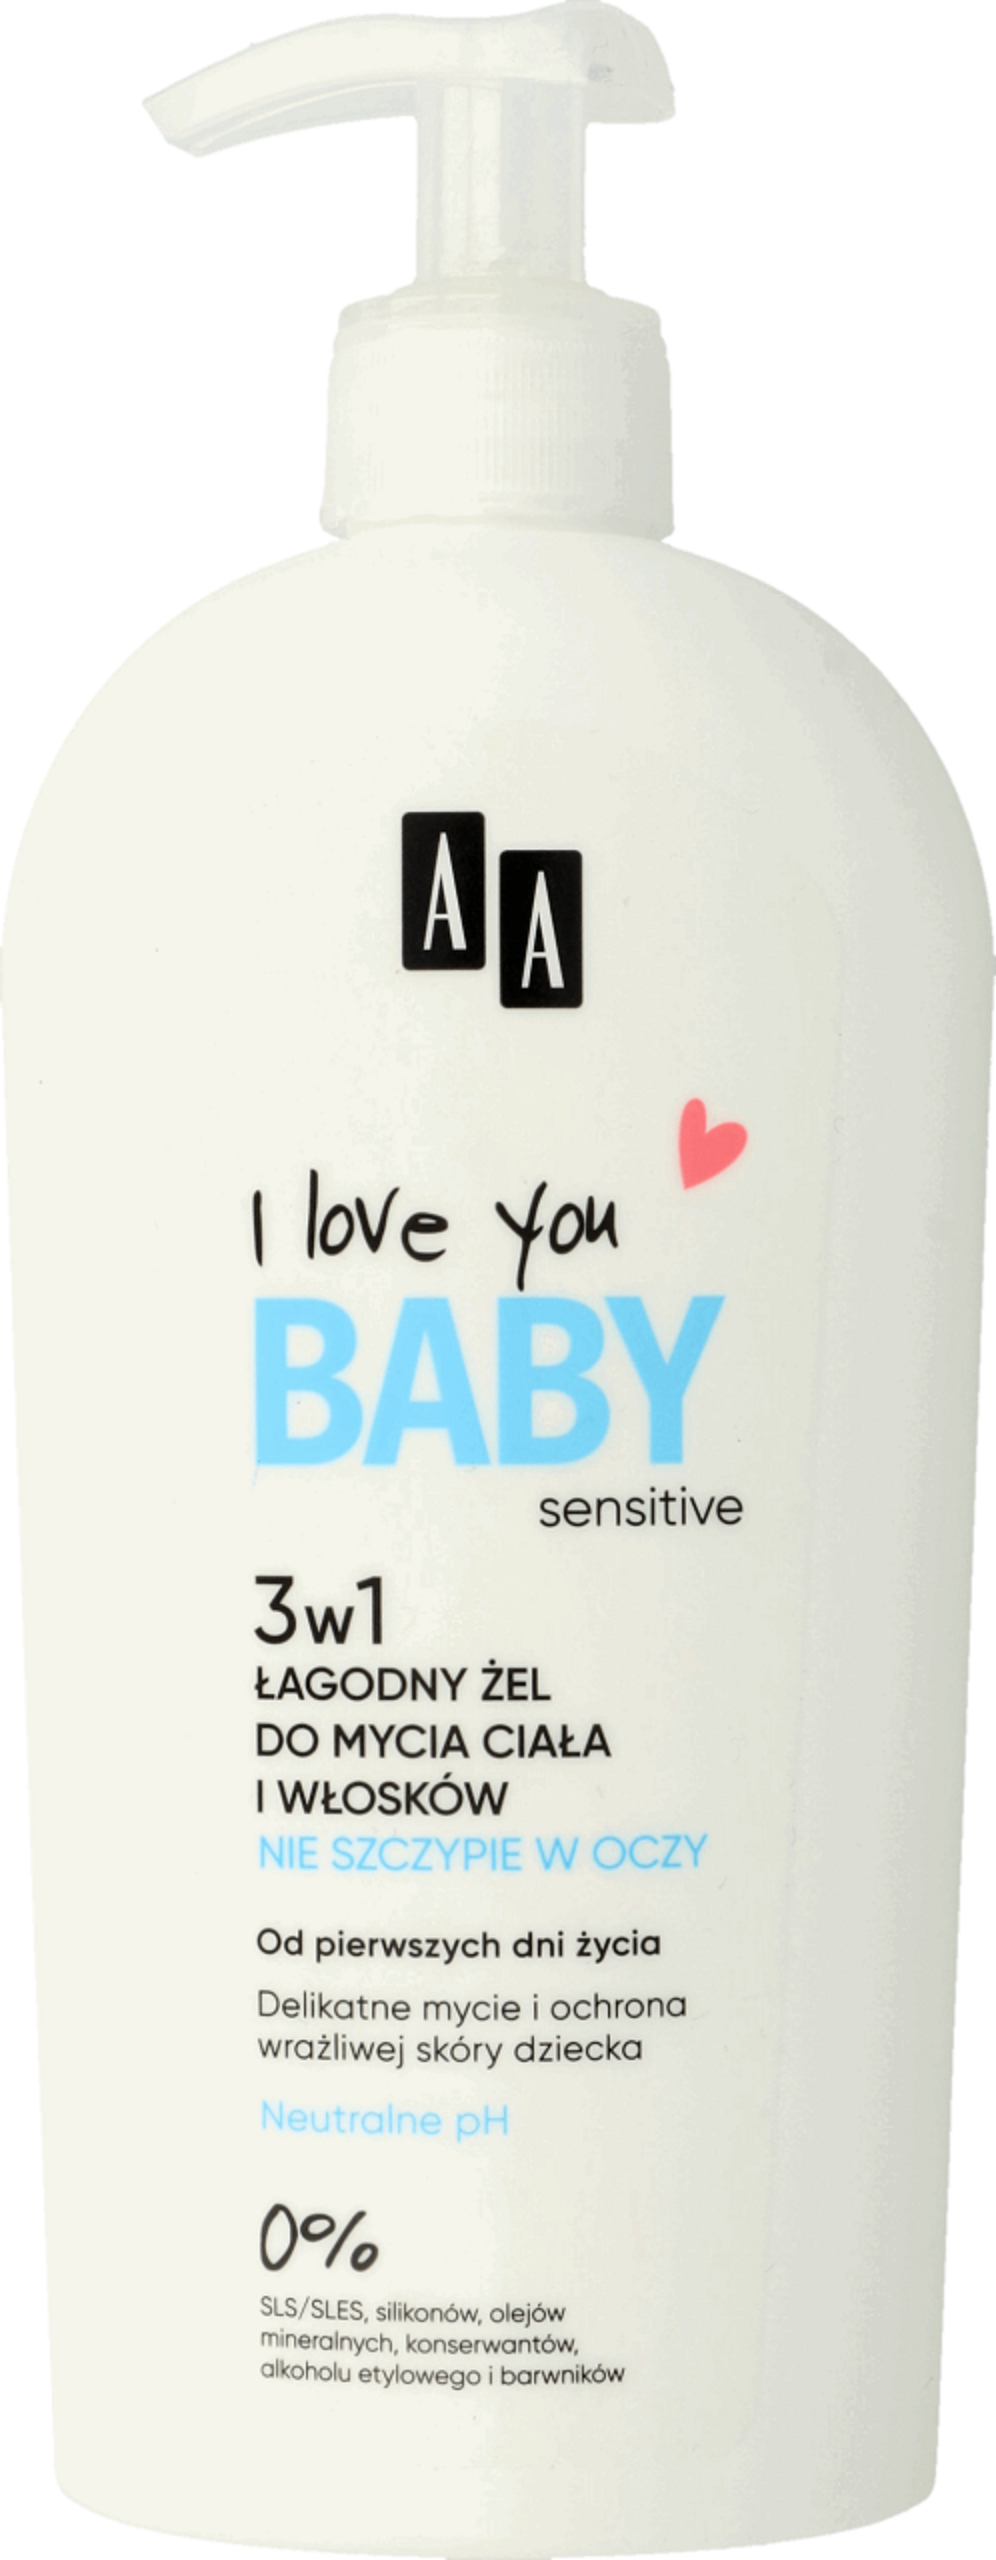 aa i love you baby szampon wizaz